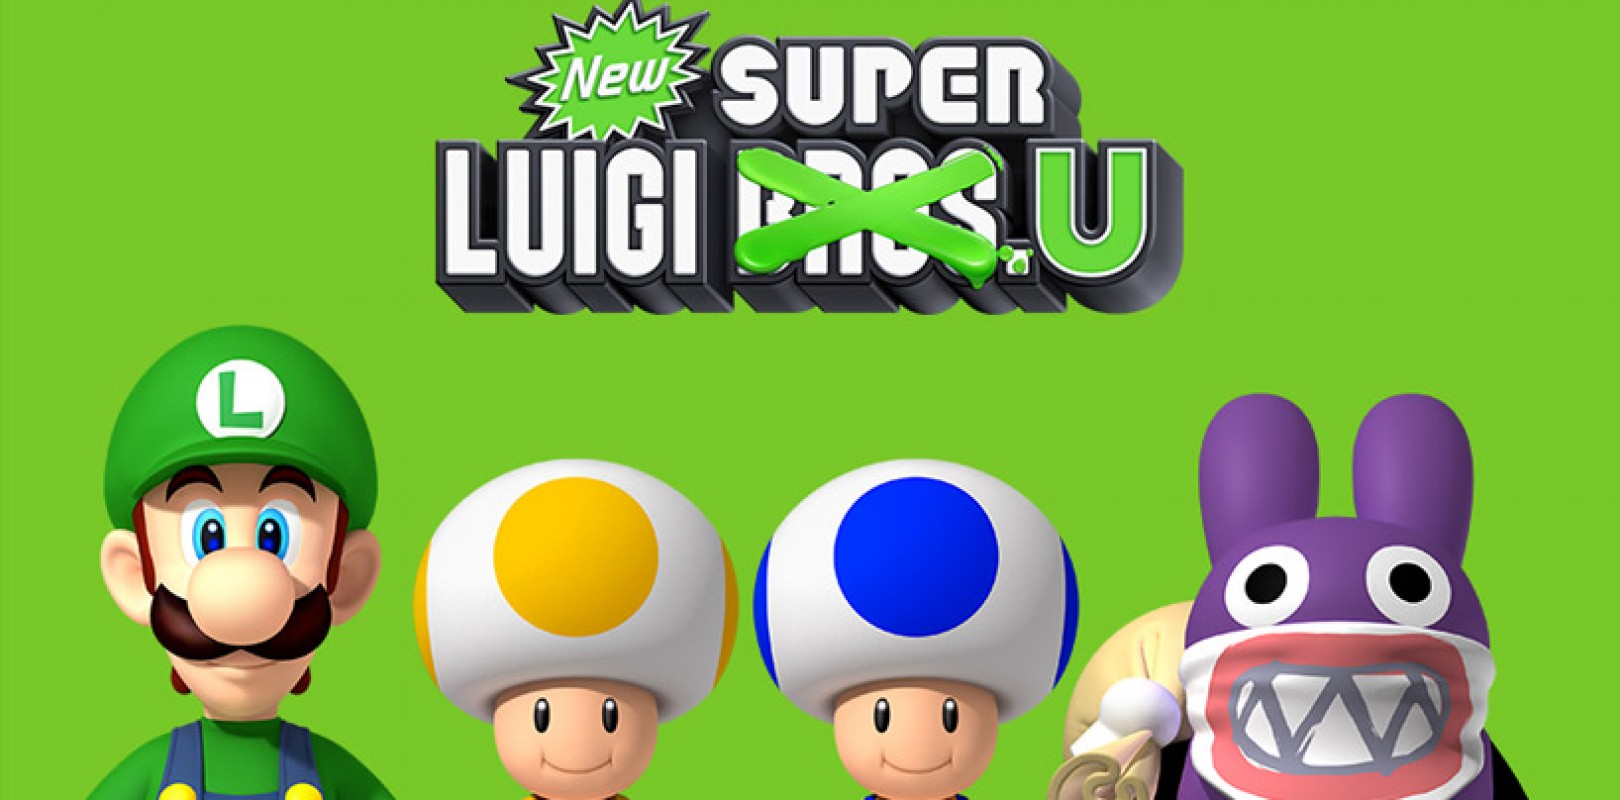 opvolger Picasso tevredenheid Review: New Super Luigi U (Wii U)